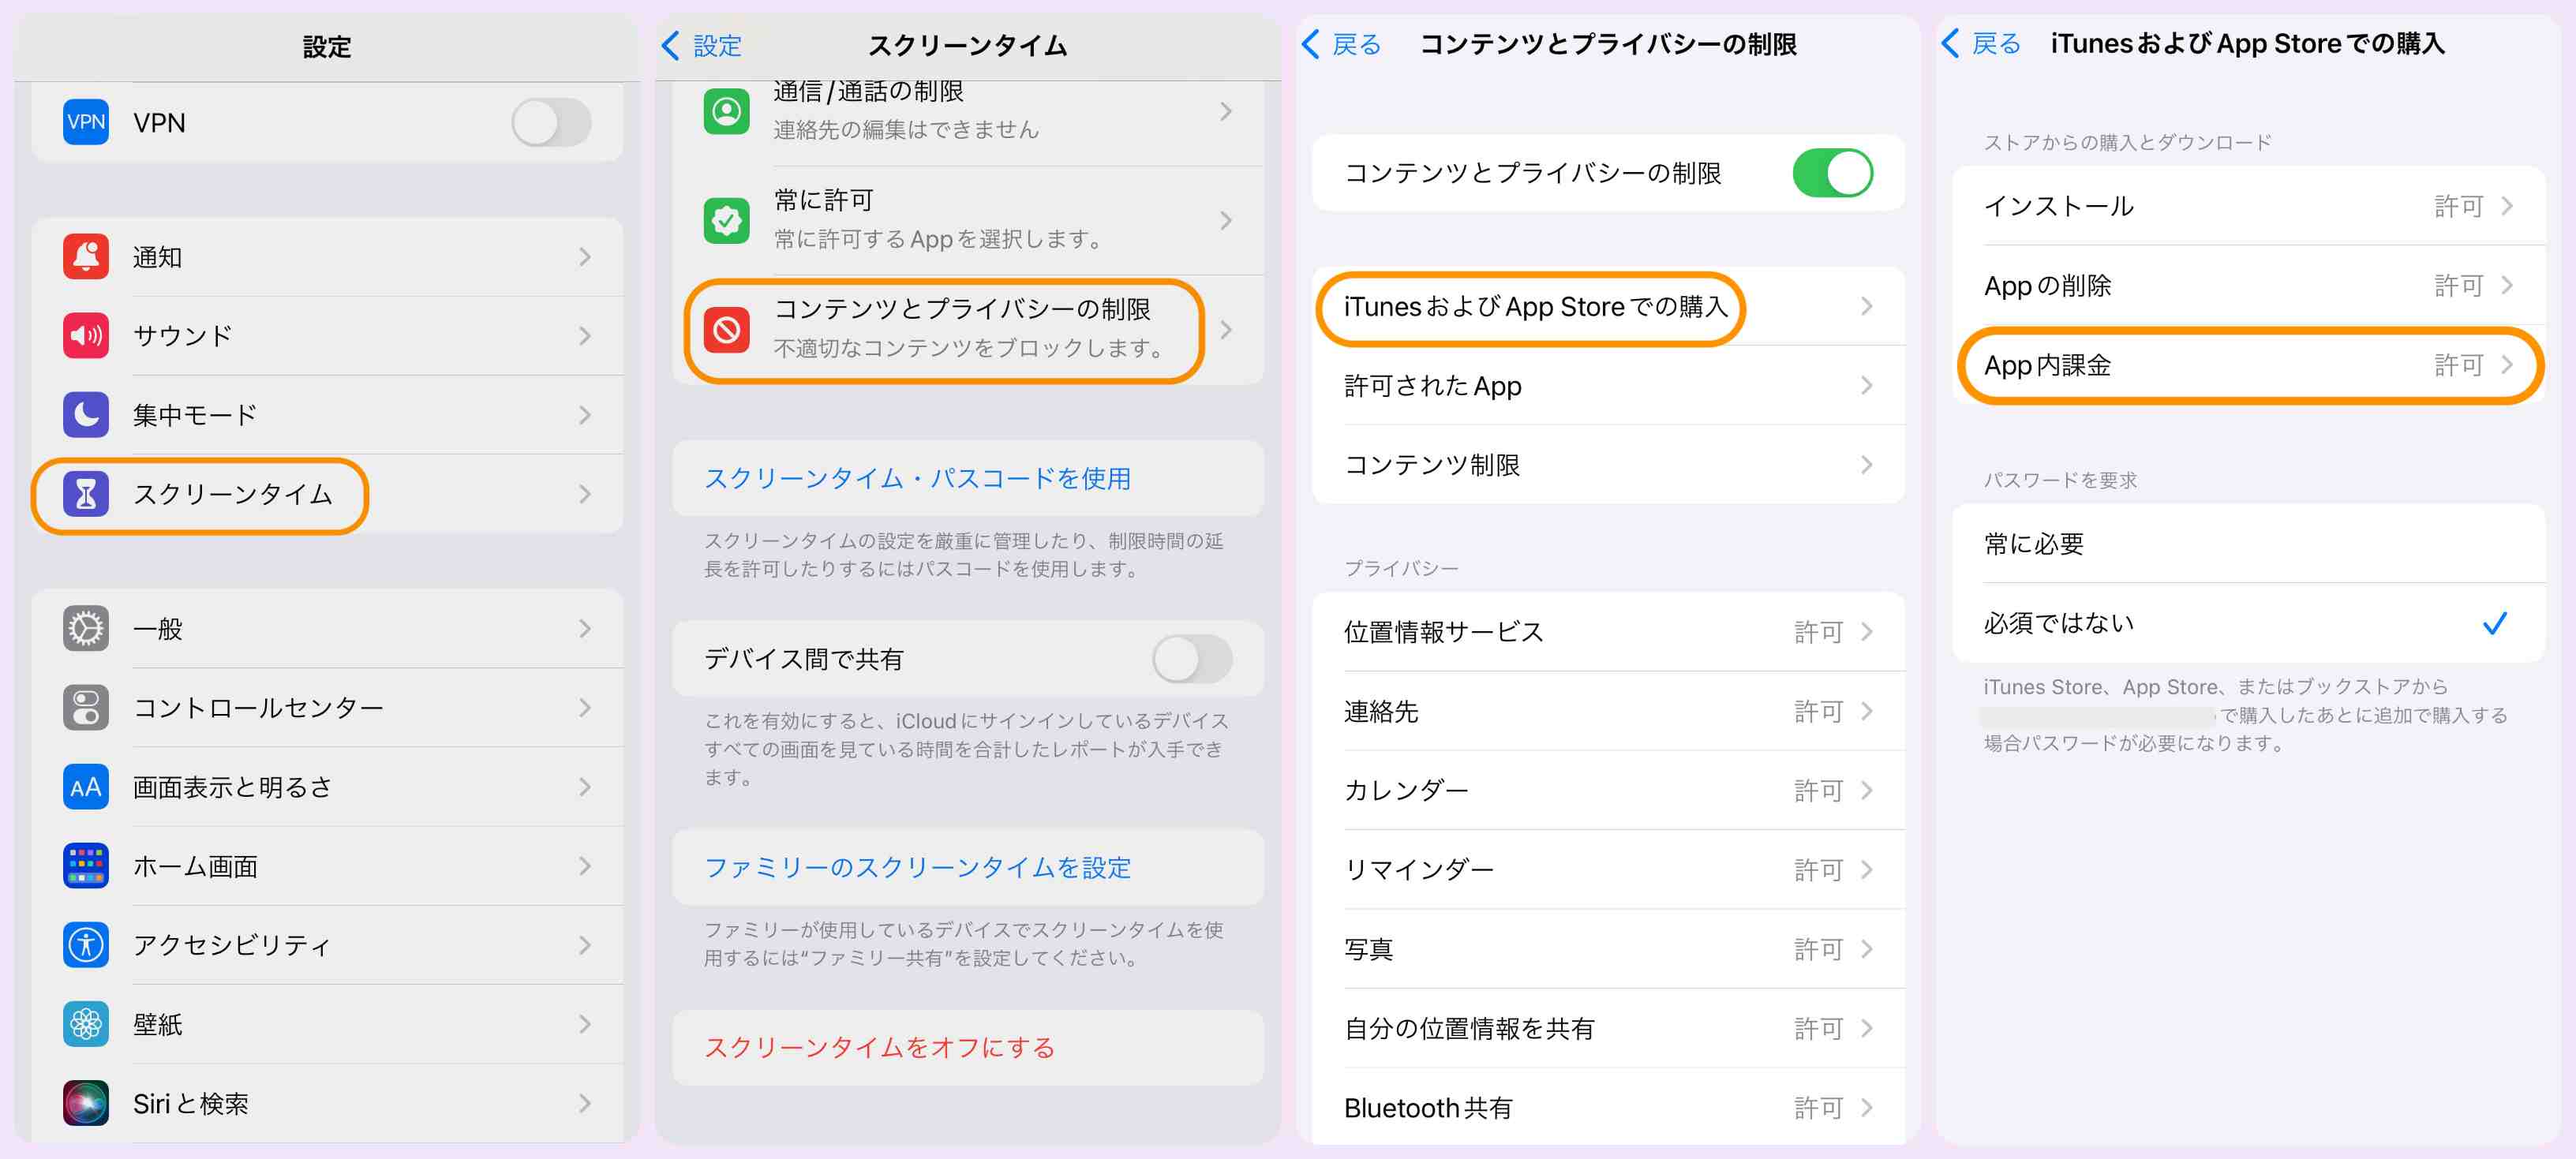 In-app_purchases_jp.jpg